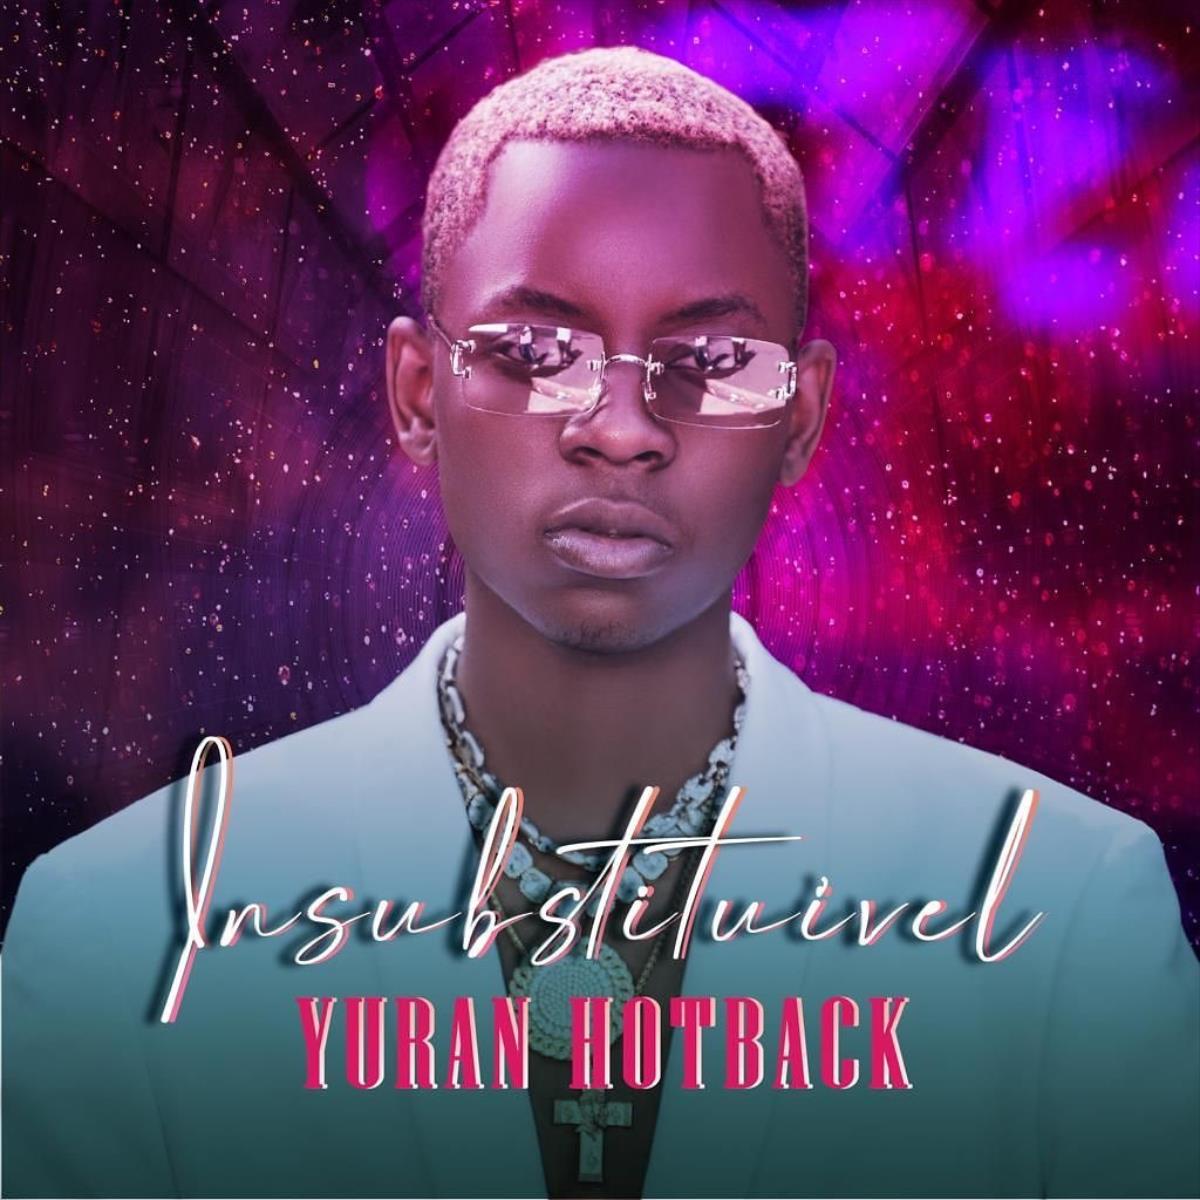 Yuran Hotback – Insubstituível EP 